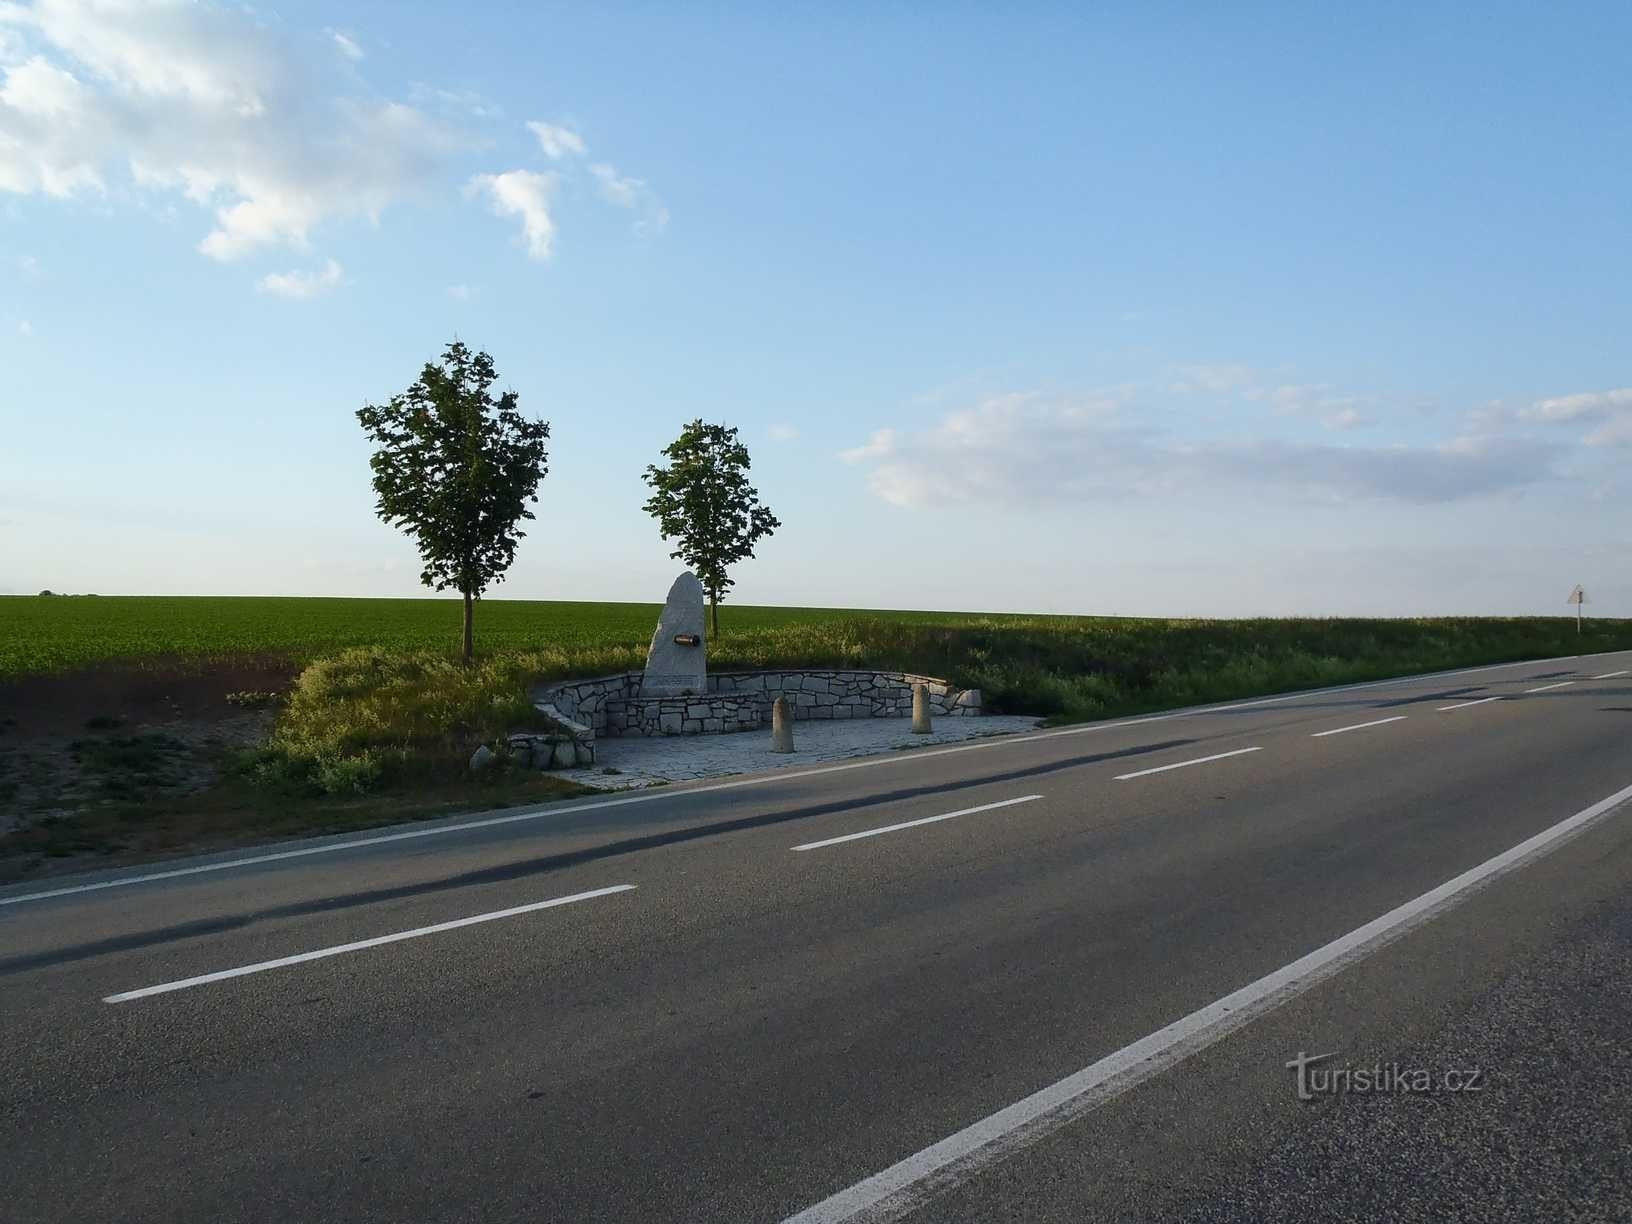 Monumento a los artilleros austriacos - 25.5.2012/XNUMX/XNUMX